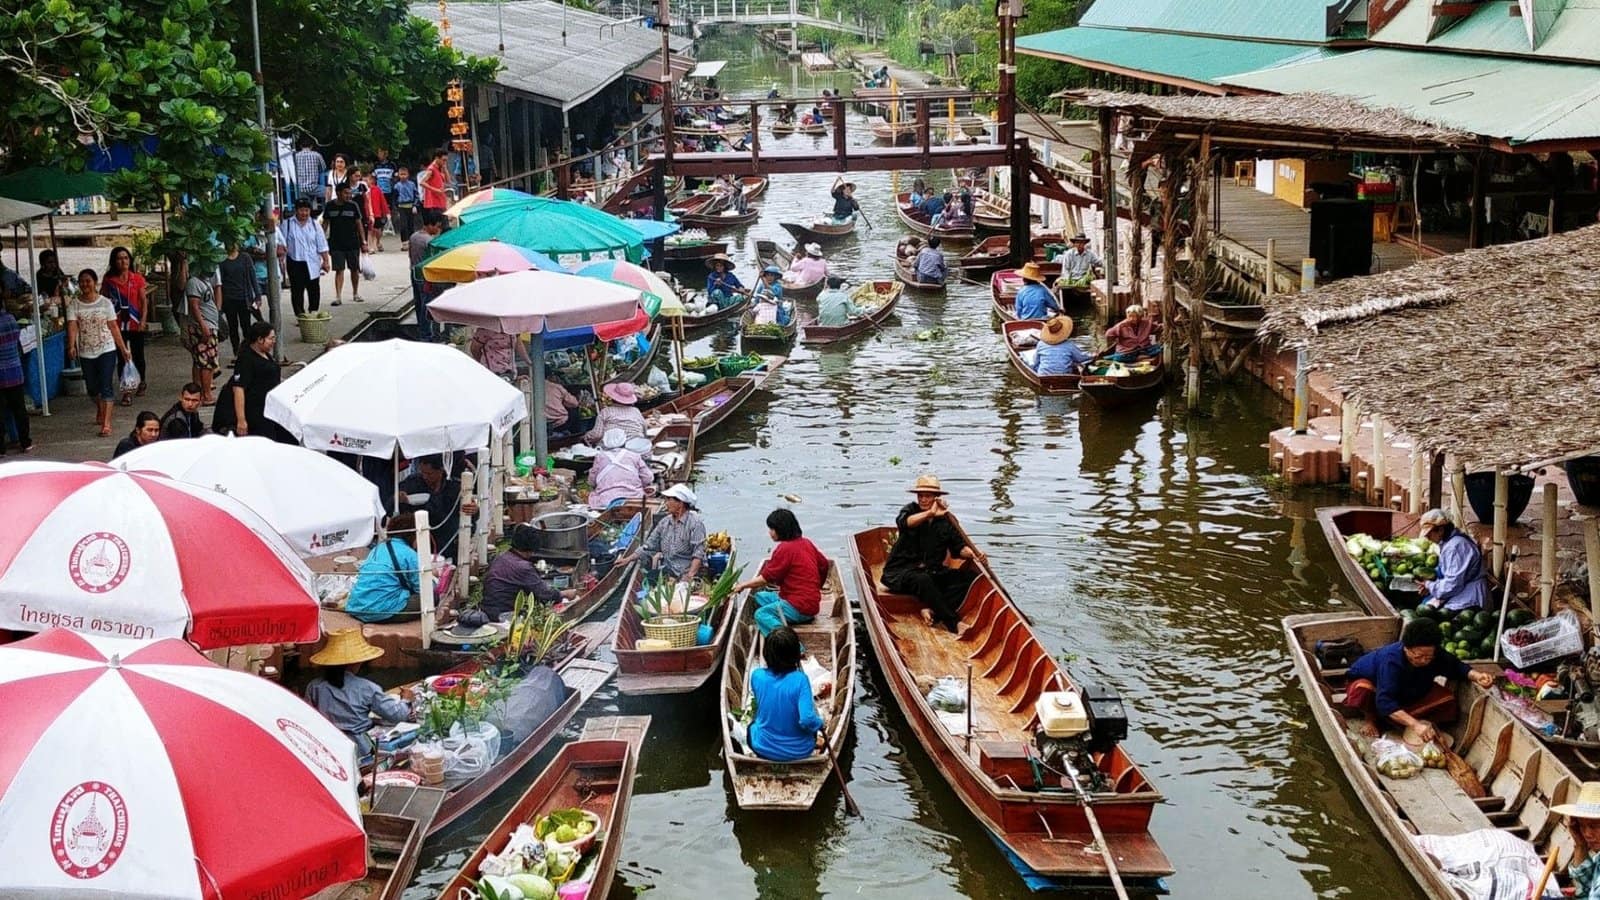 marche flottant tha kha floating market - thailande